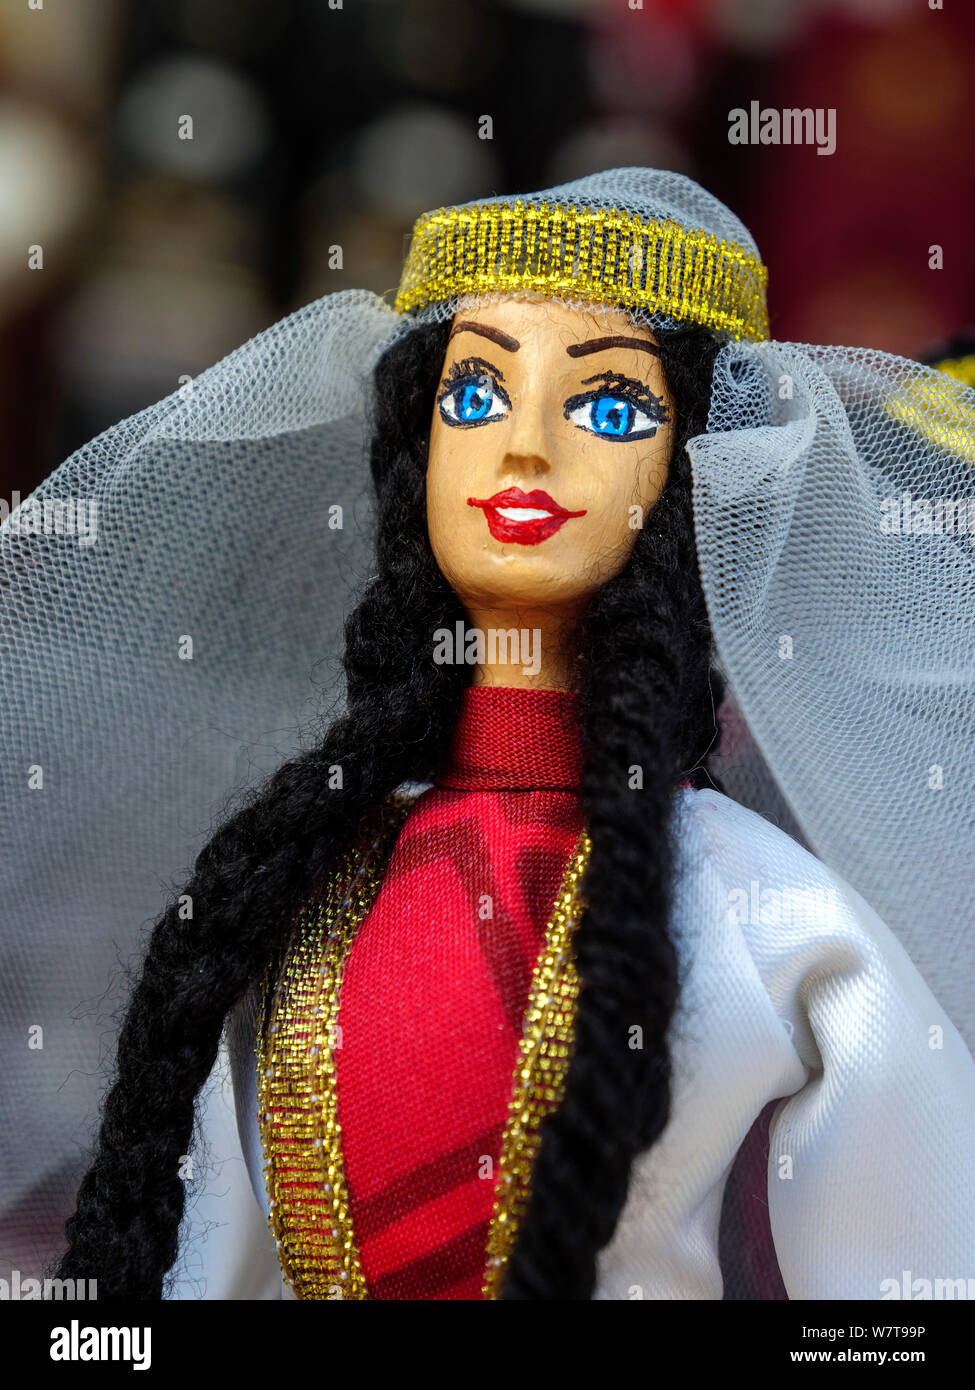 Puppen in traditioneller Kleidung - Souvenir, Batumi, Adscharien - Atschara, Georgien, Europa bambole in abito tradizionale, Batumi, Adjara, Georgia, UE Foto Stock